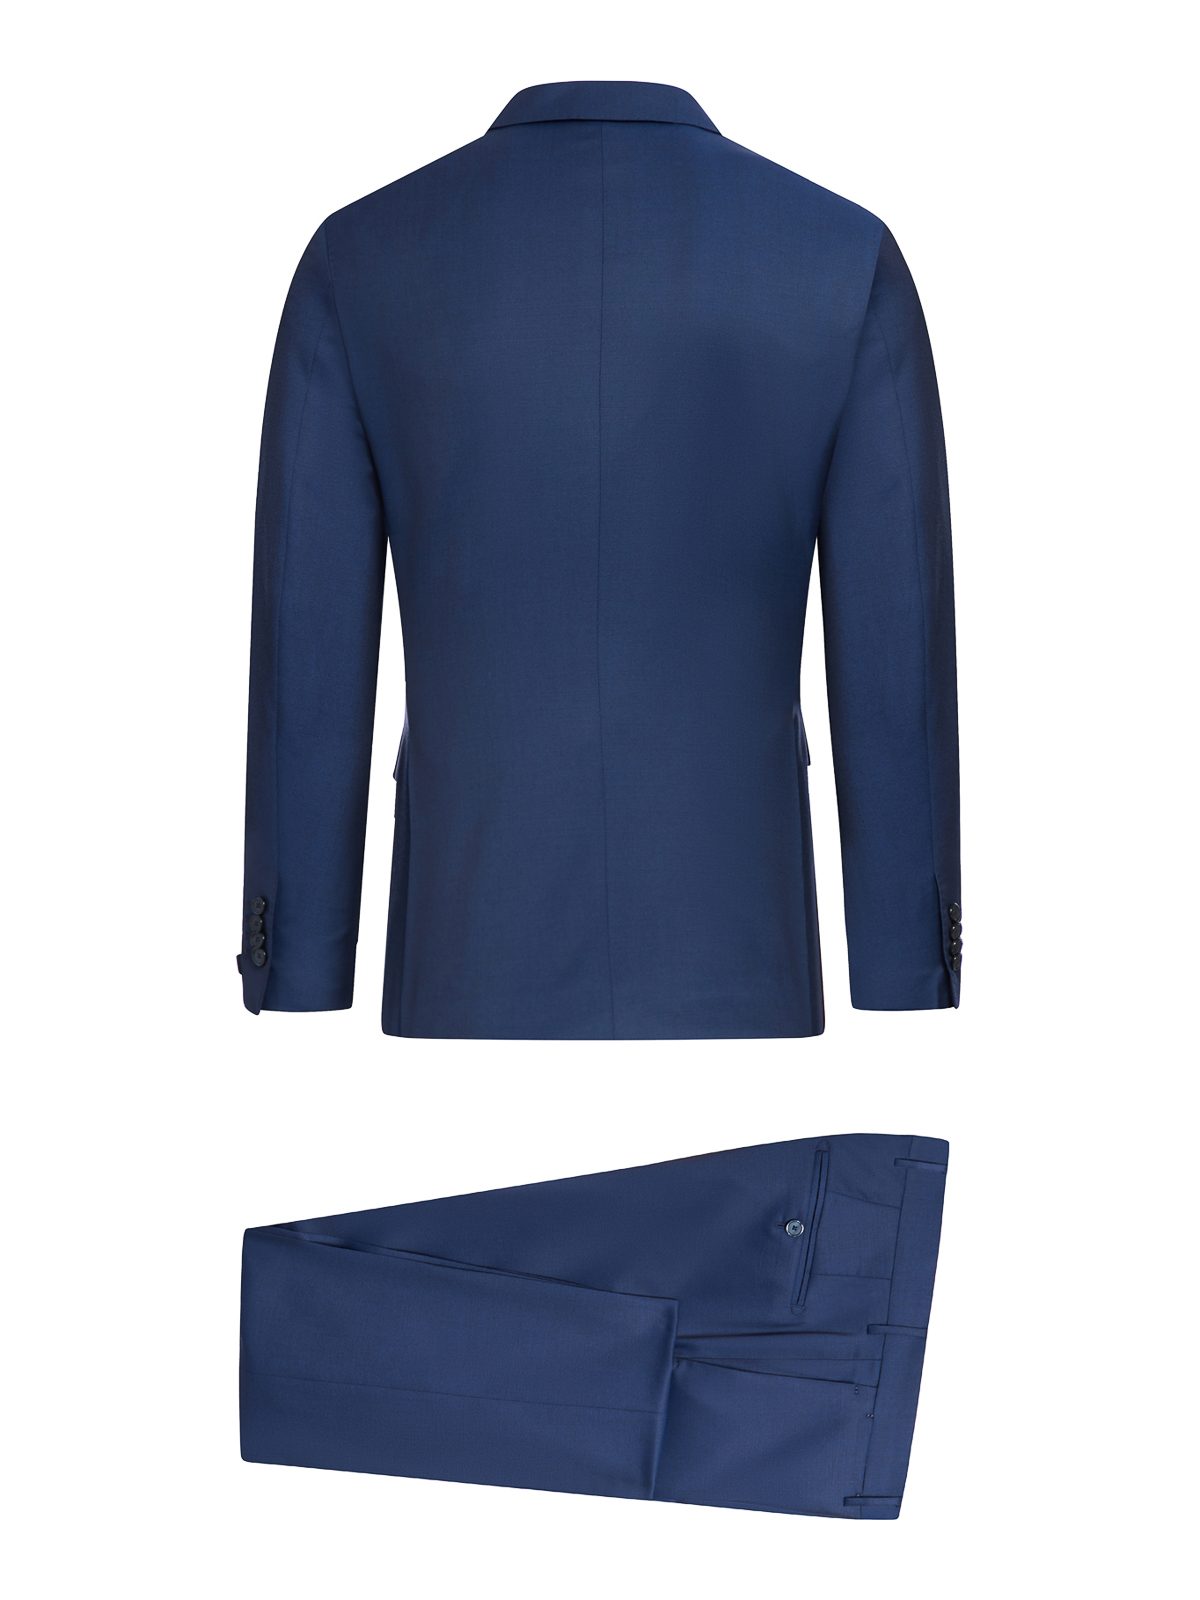 Shop Tagliatore Bruce Jacket Suit With Vest In Blue